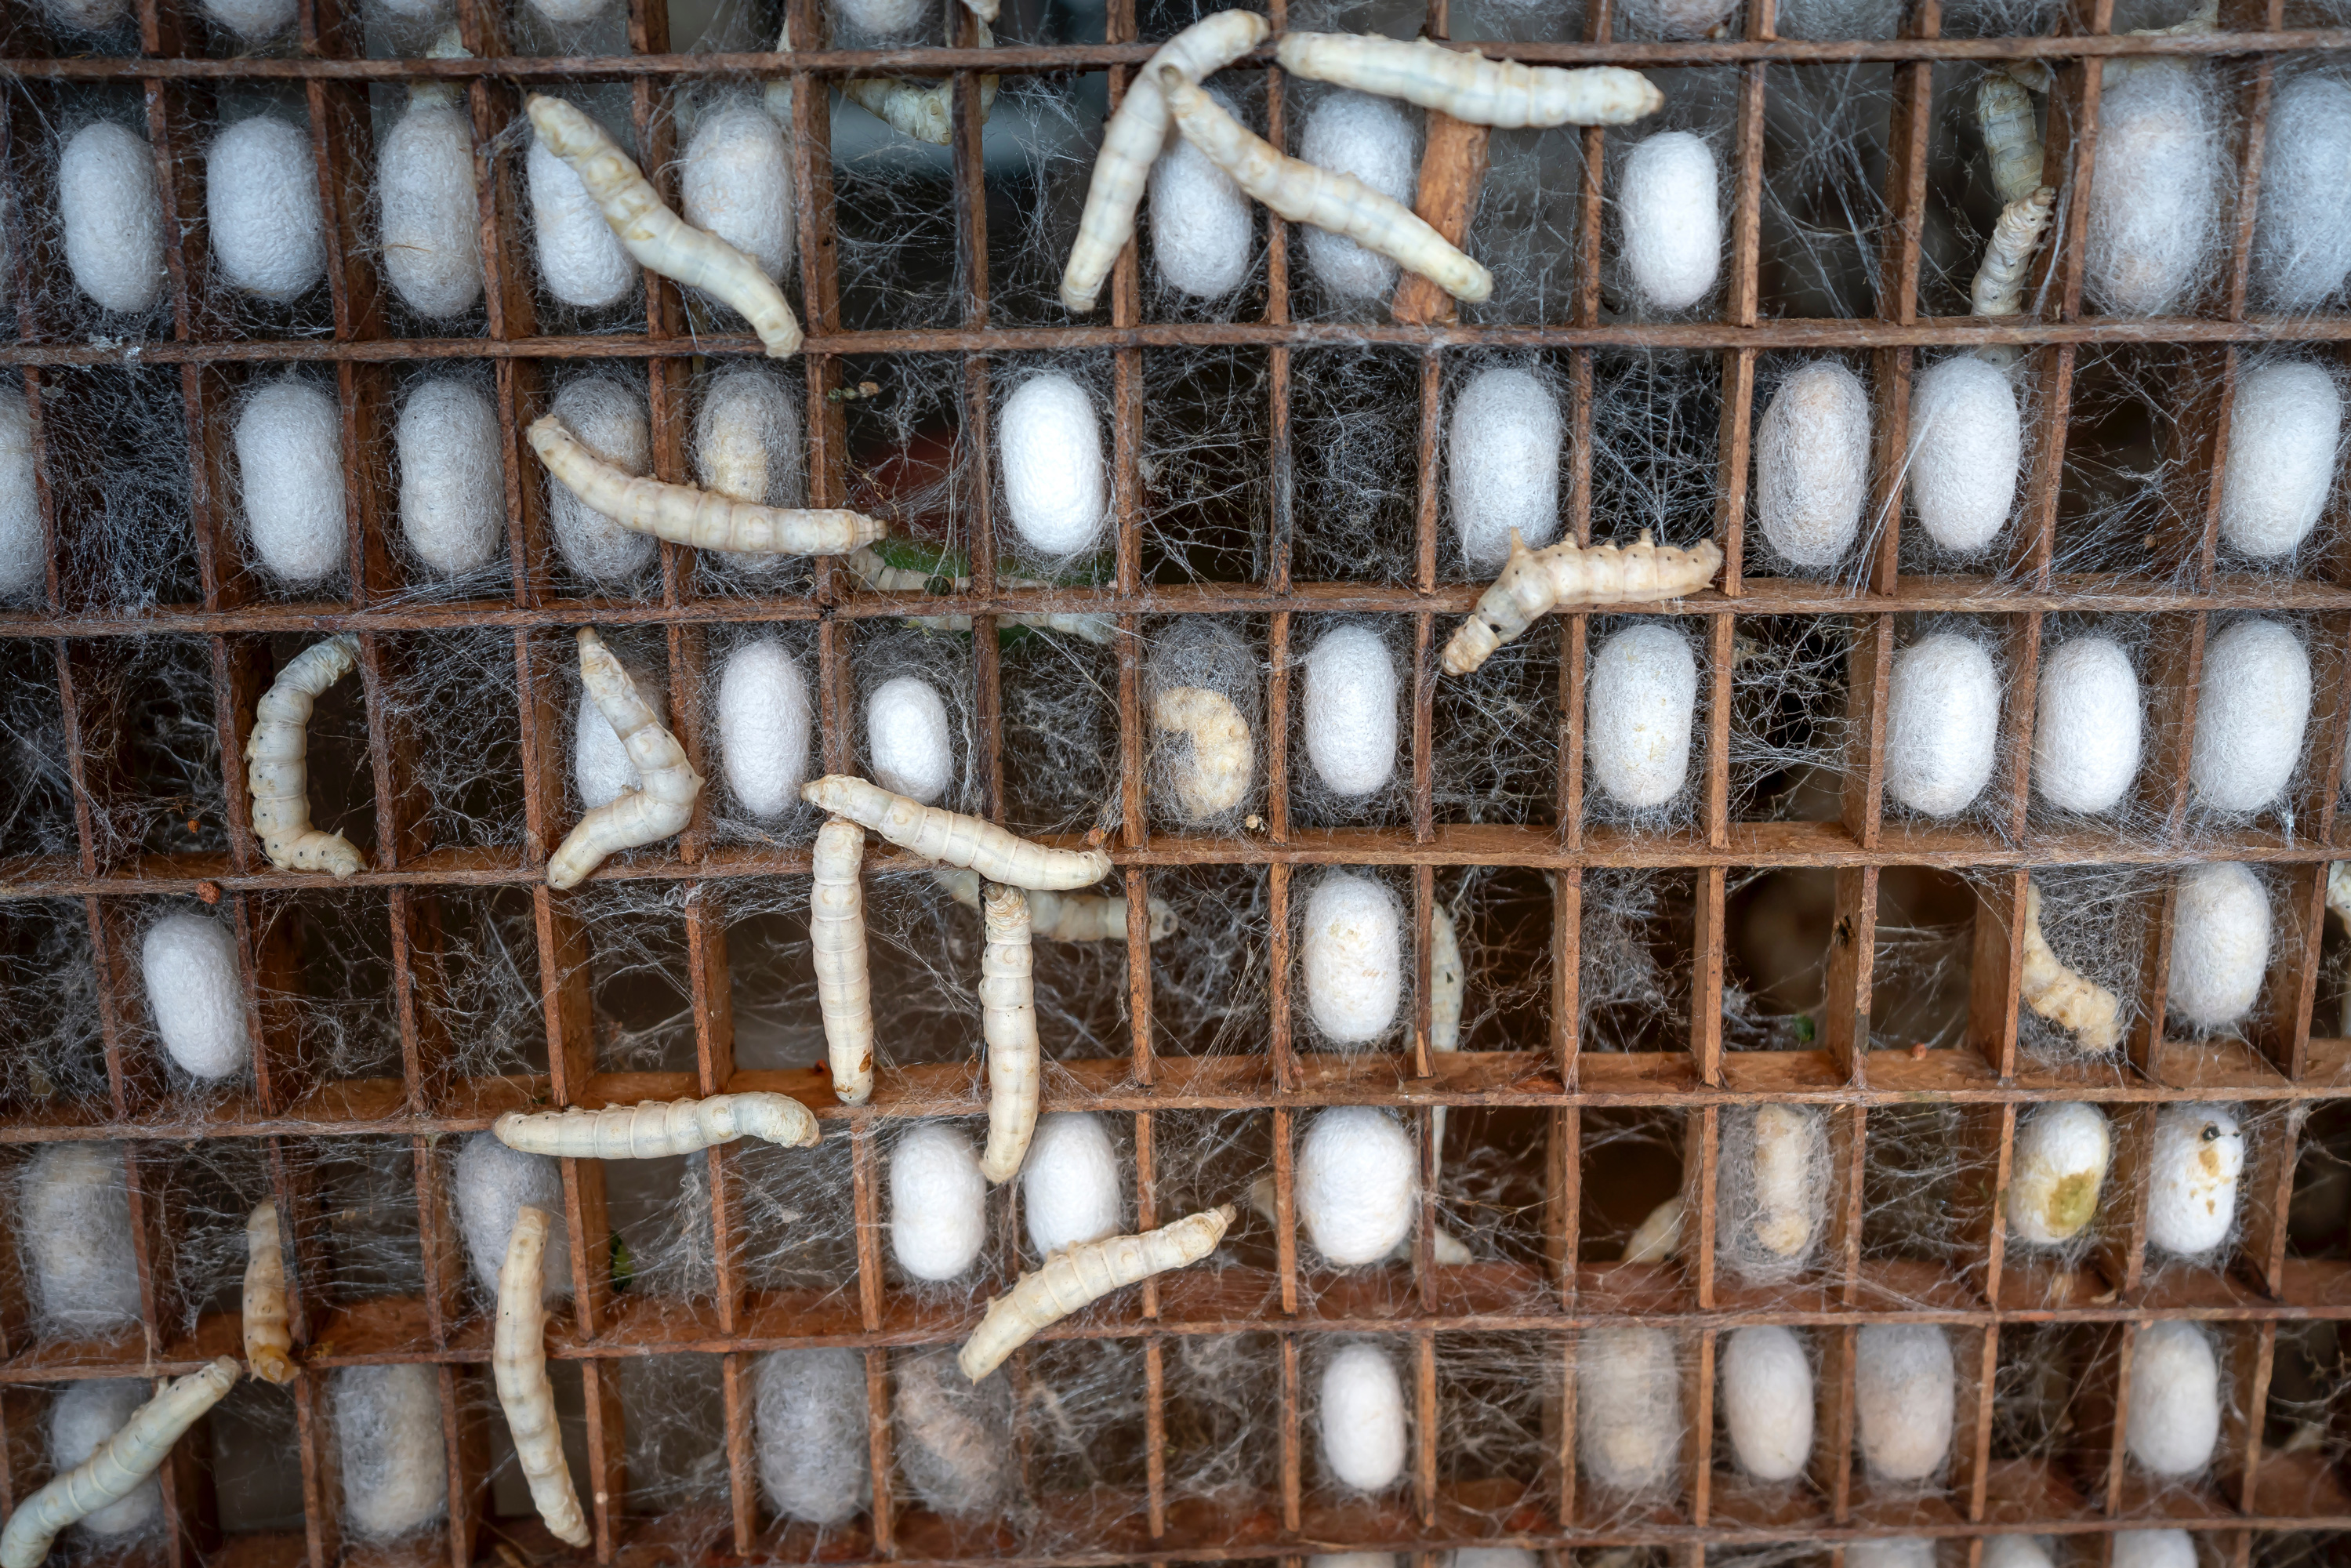 VegNews.Silkworms